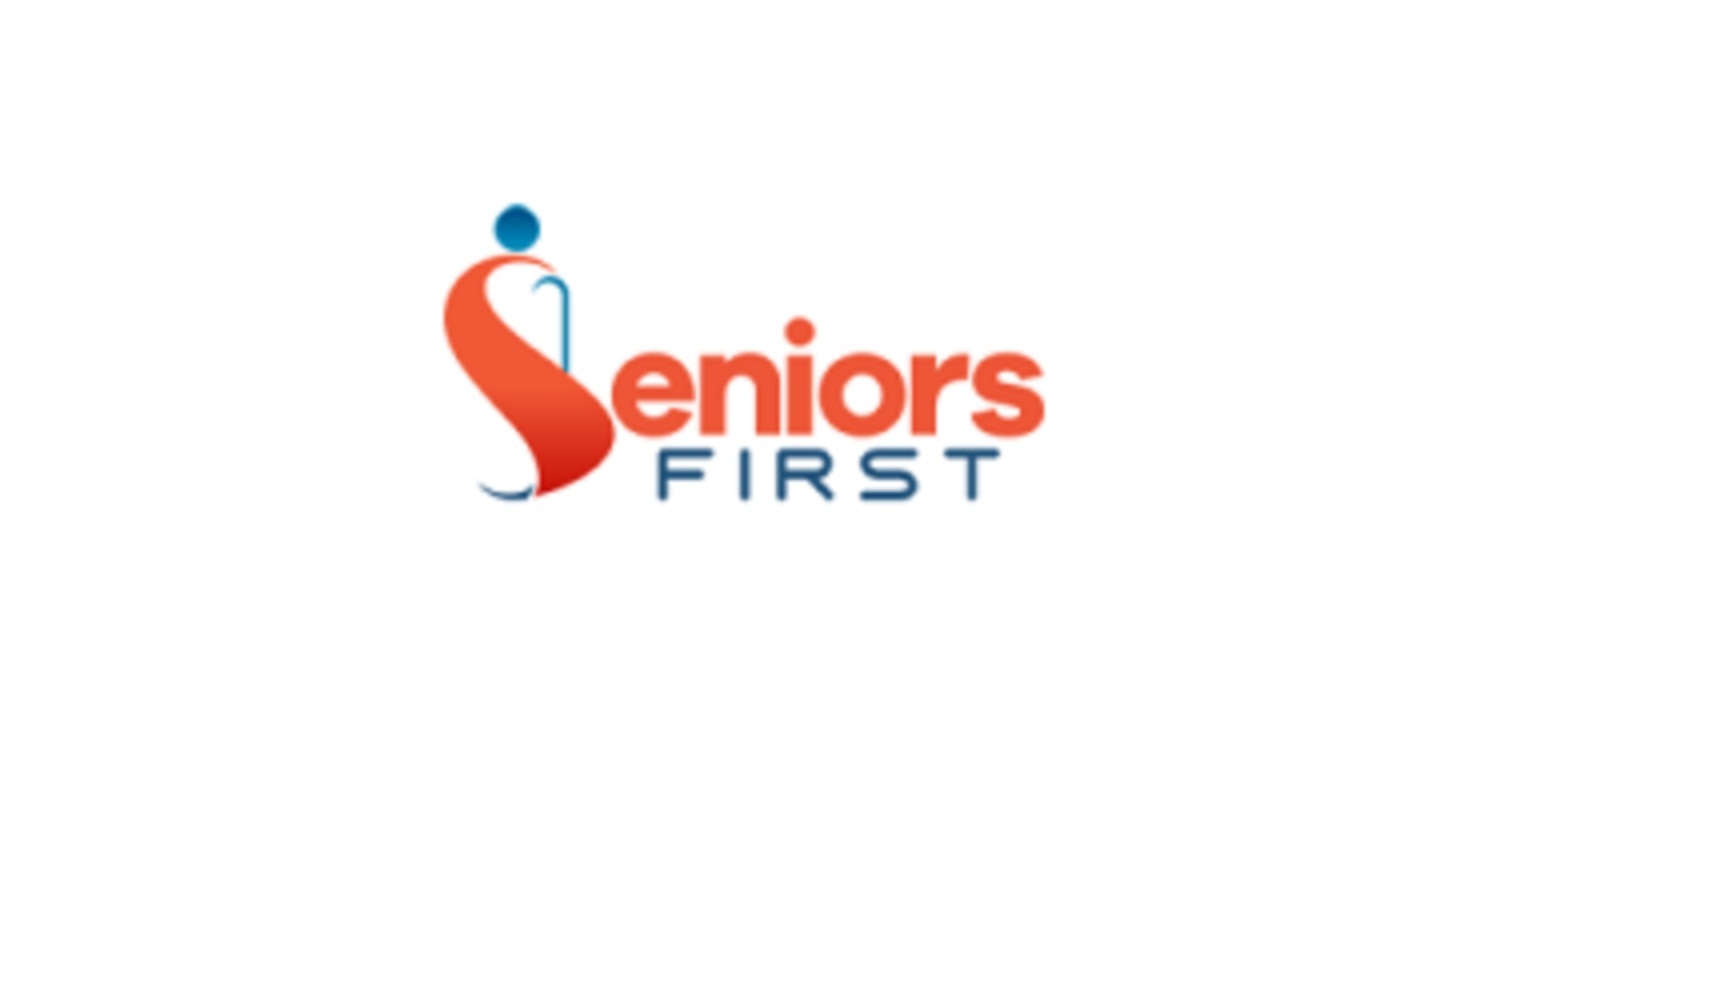 Seniors First Senior Care Services